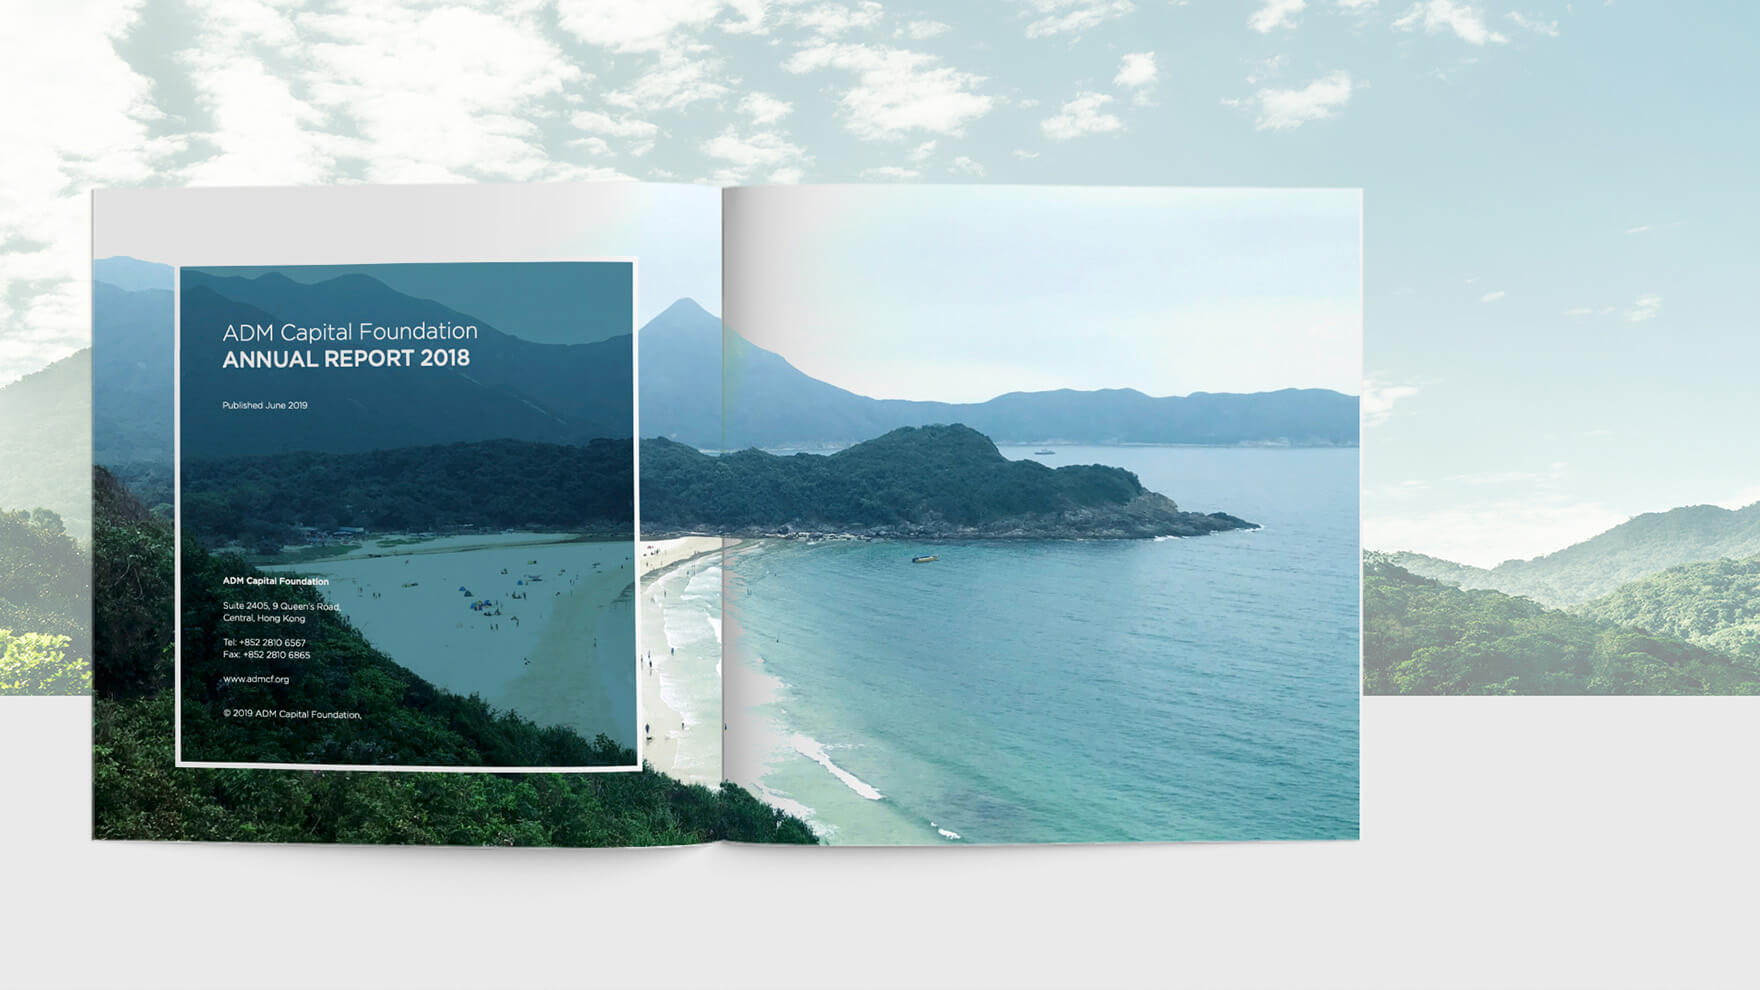 Branding Agency Hong Kong_ADMCF_Annual Report Design 2018_CheddarMedia_7_1760